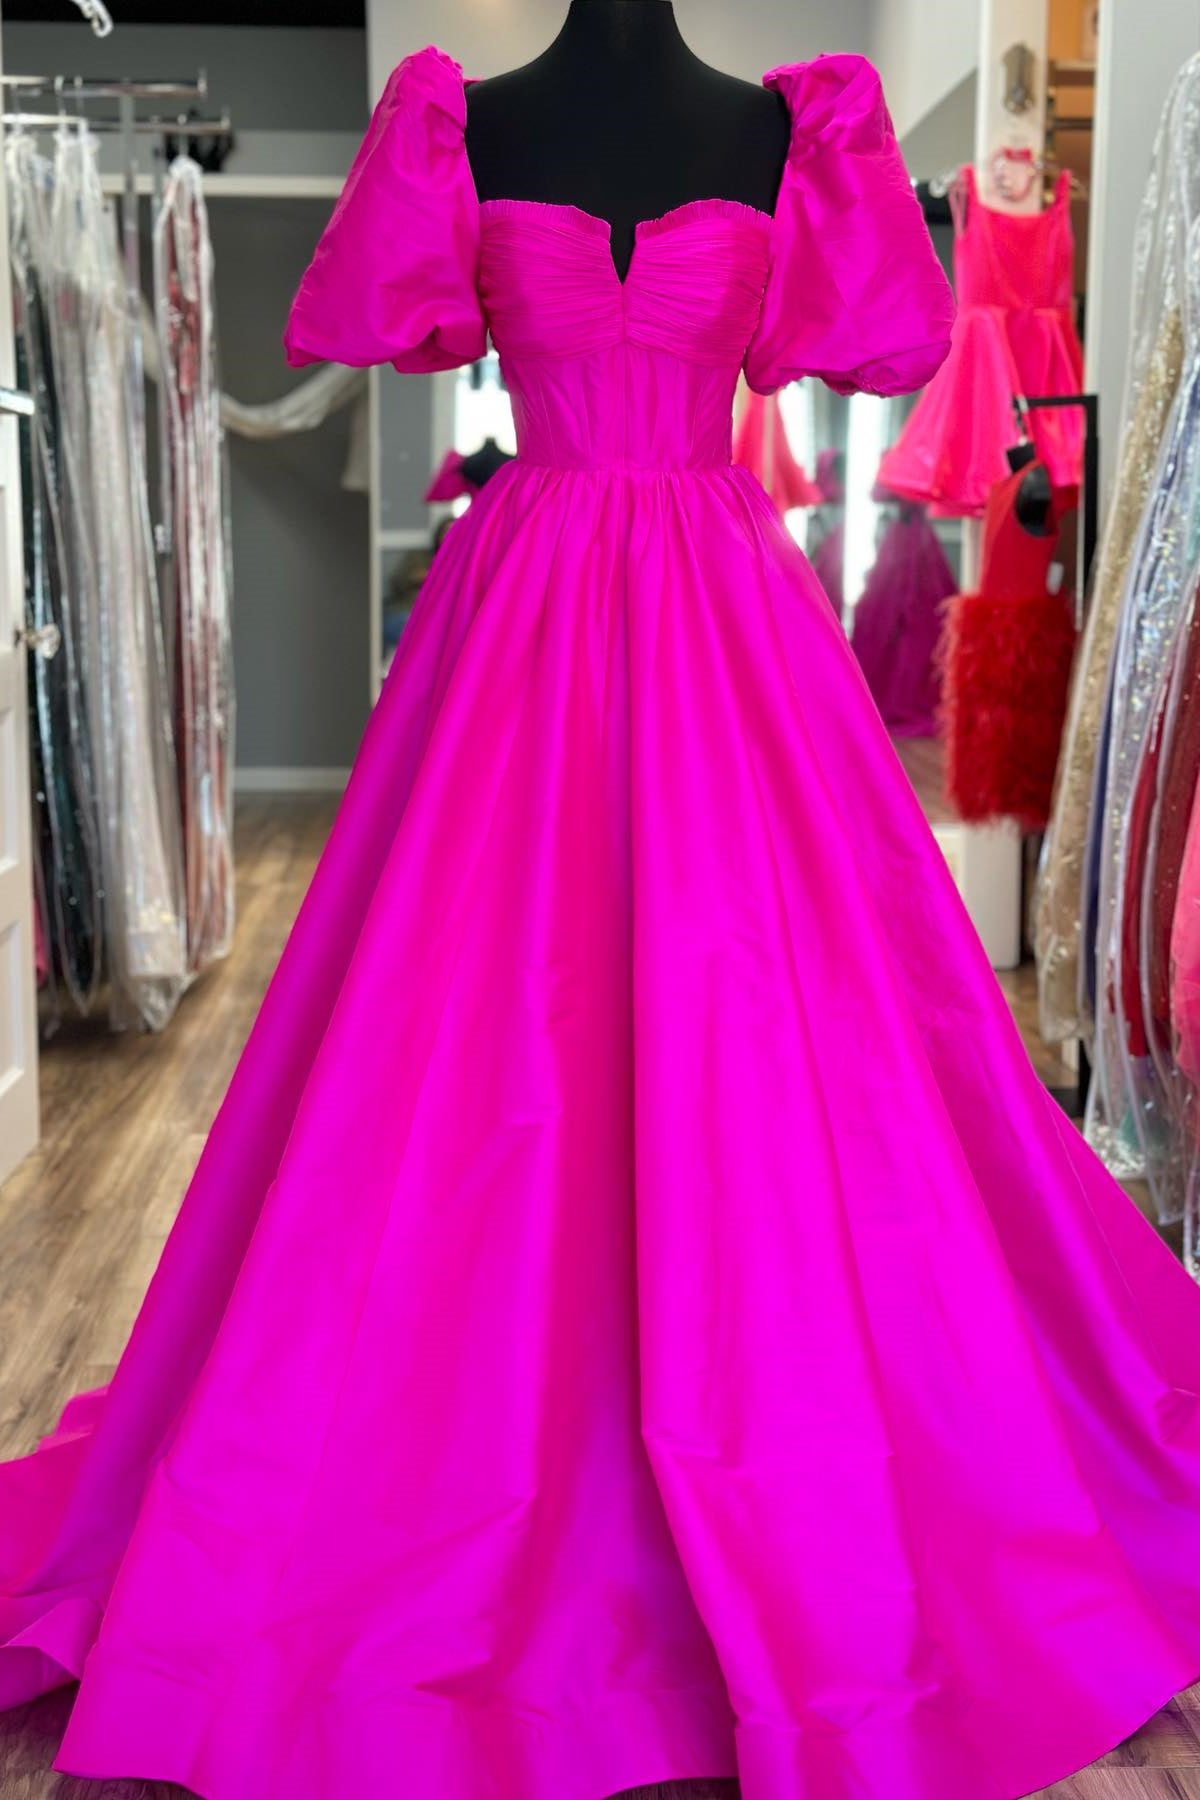 Fuchsia Puff Sleeves Ruffle A-line Long Prom Dress